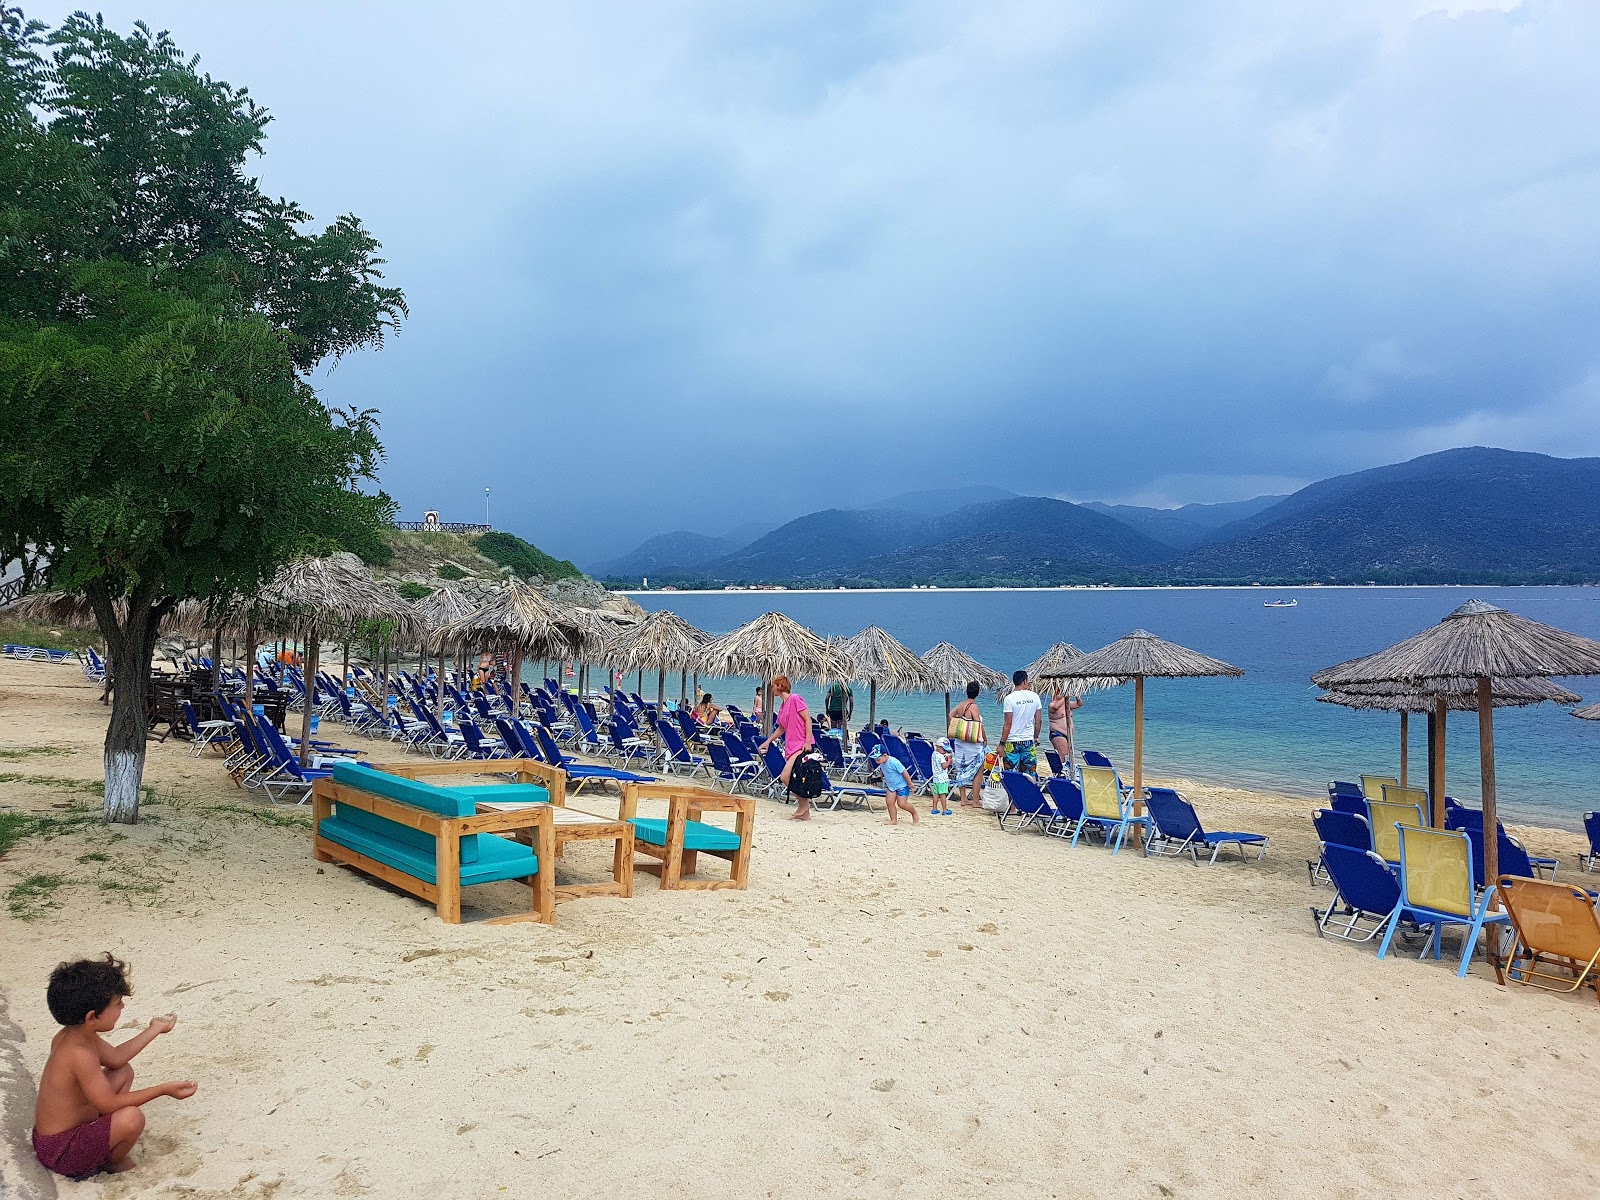 Fotografie cu Tourkolimnionas beach și peisajul său frumos